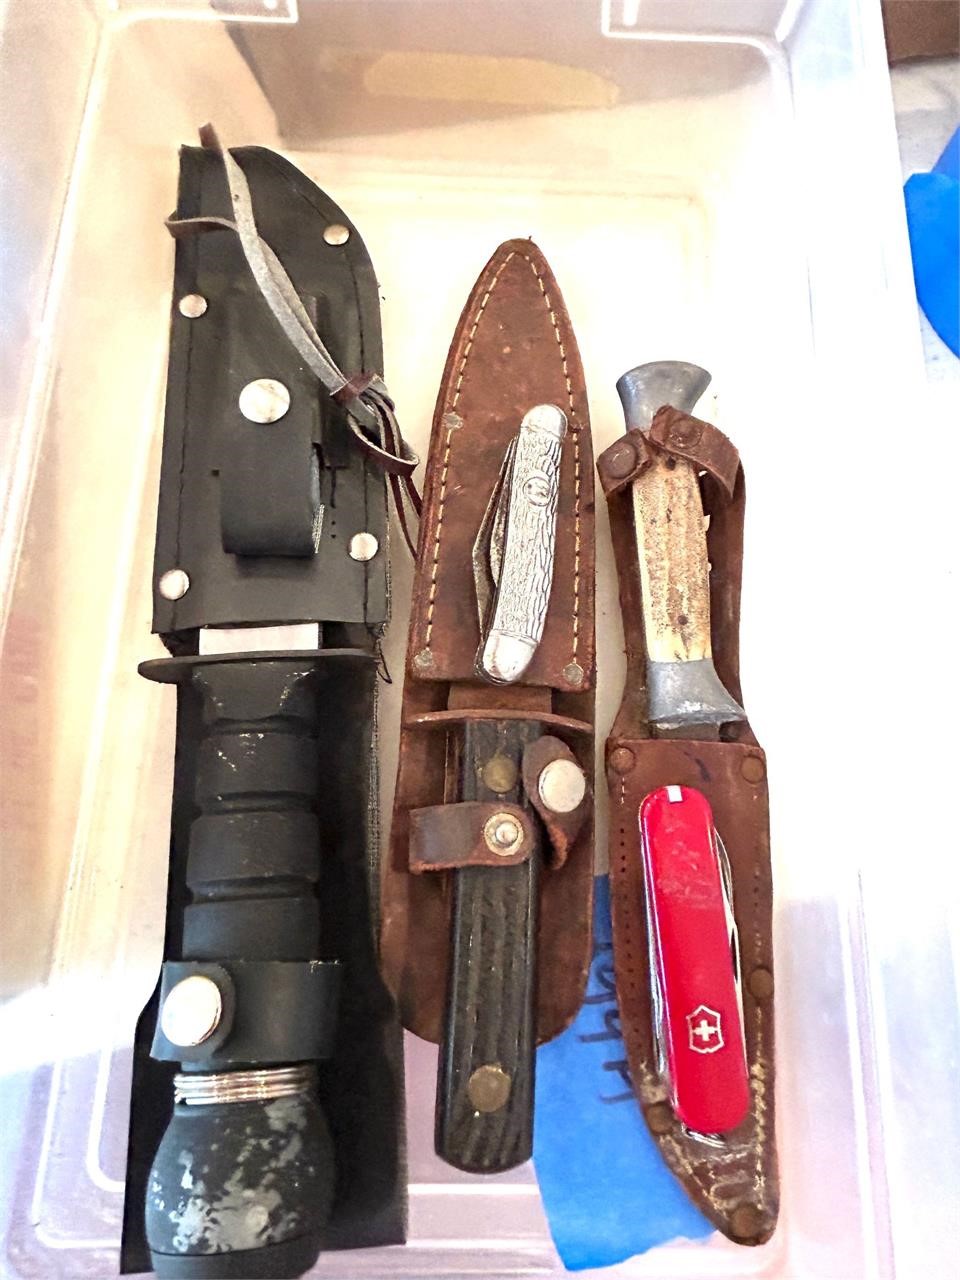 Group of knives - see pics